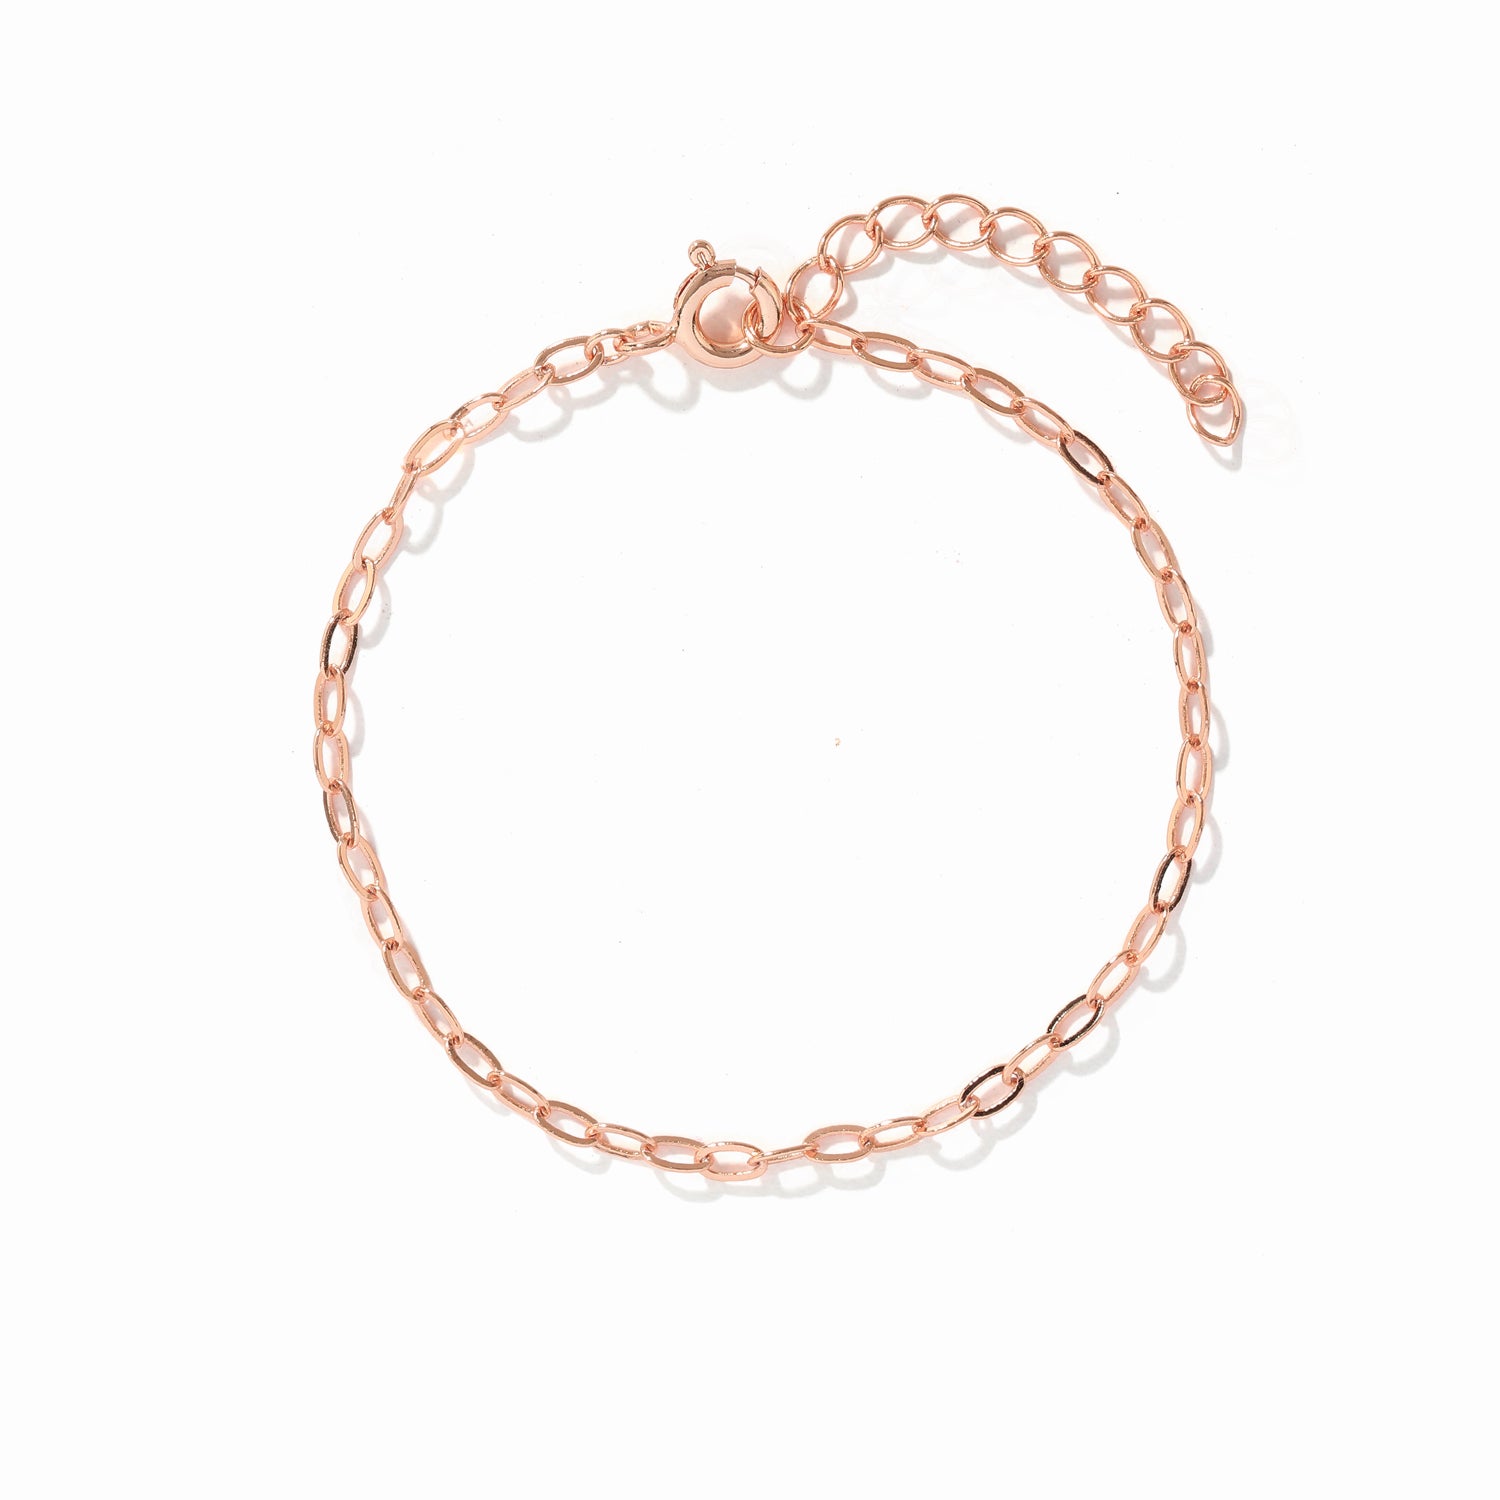 Minimalist and classy chain bracelet. Rose gold chain bracelet.